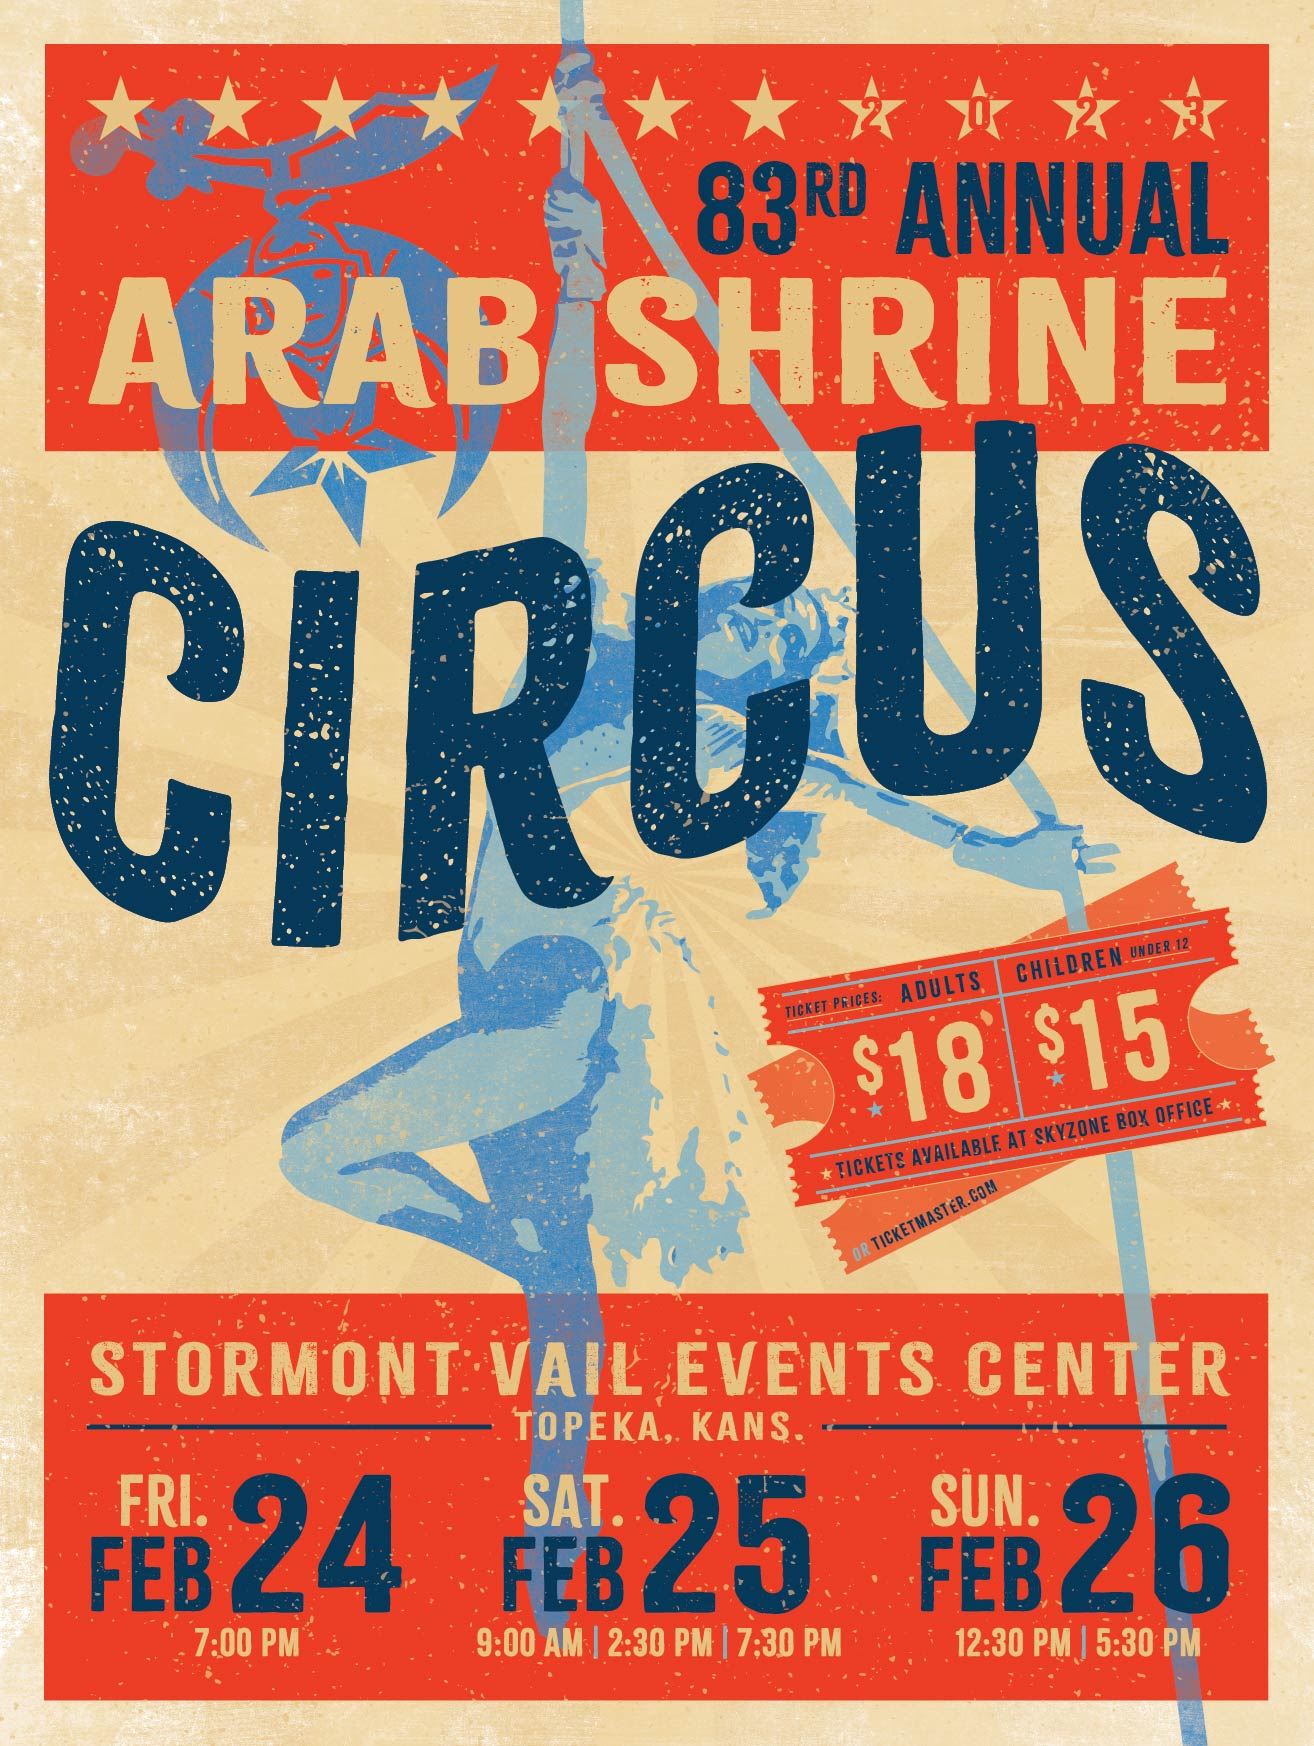 Arab Shrine Circus